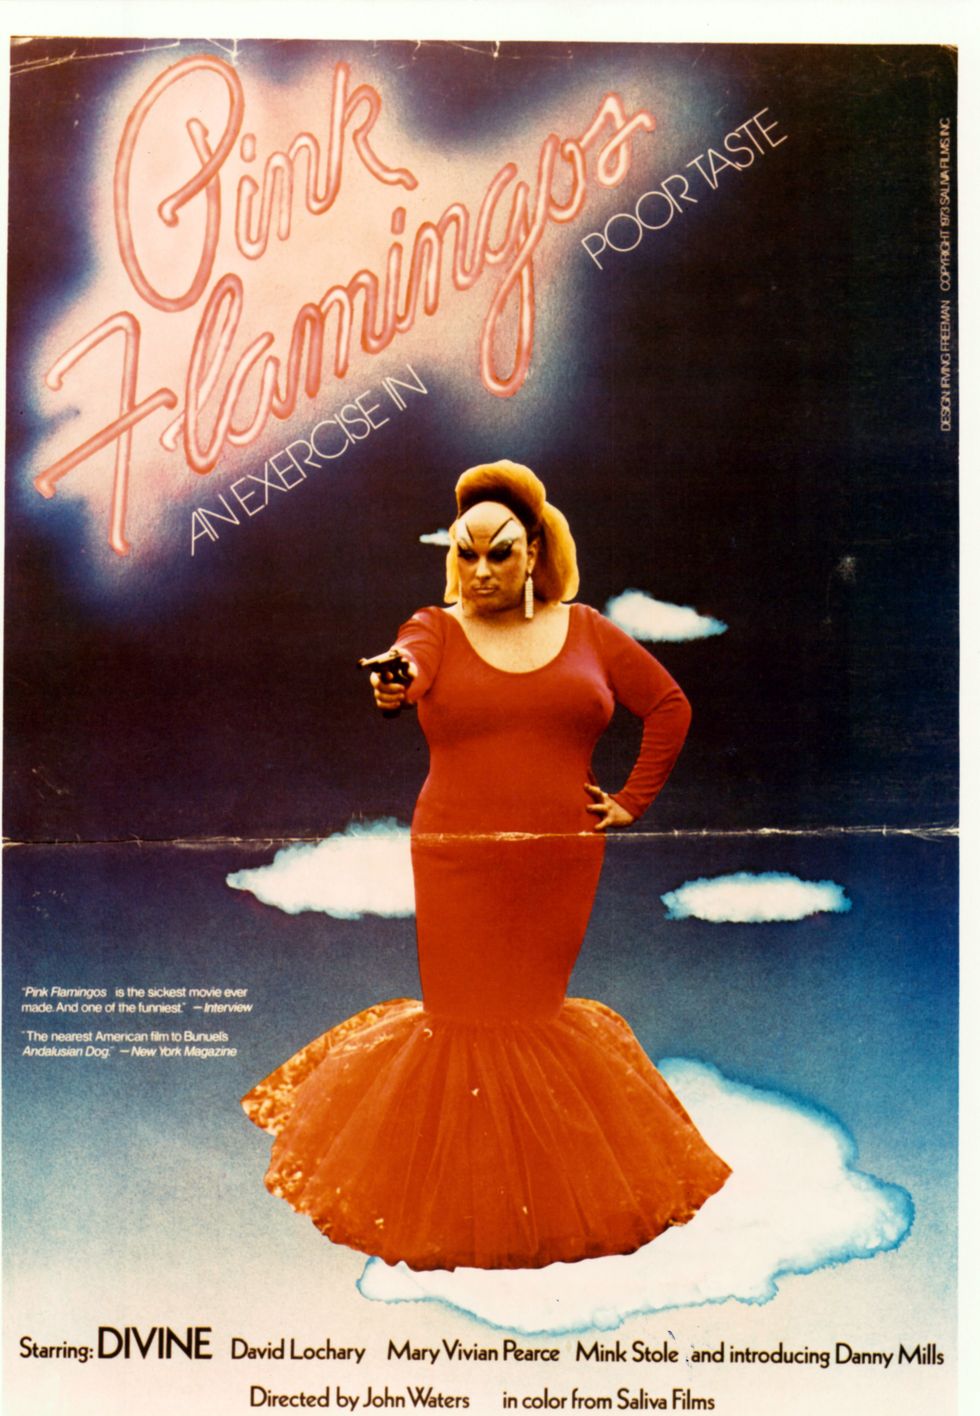 Orange, Poster, Vintage advertisement, Flamenco, Dance, Advertising, 